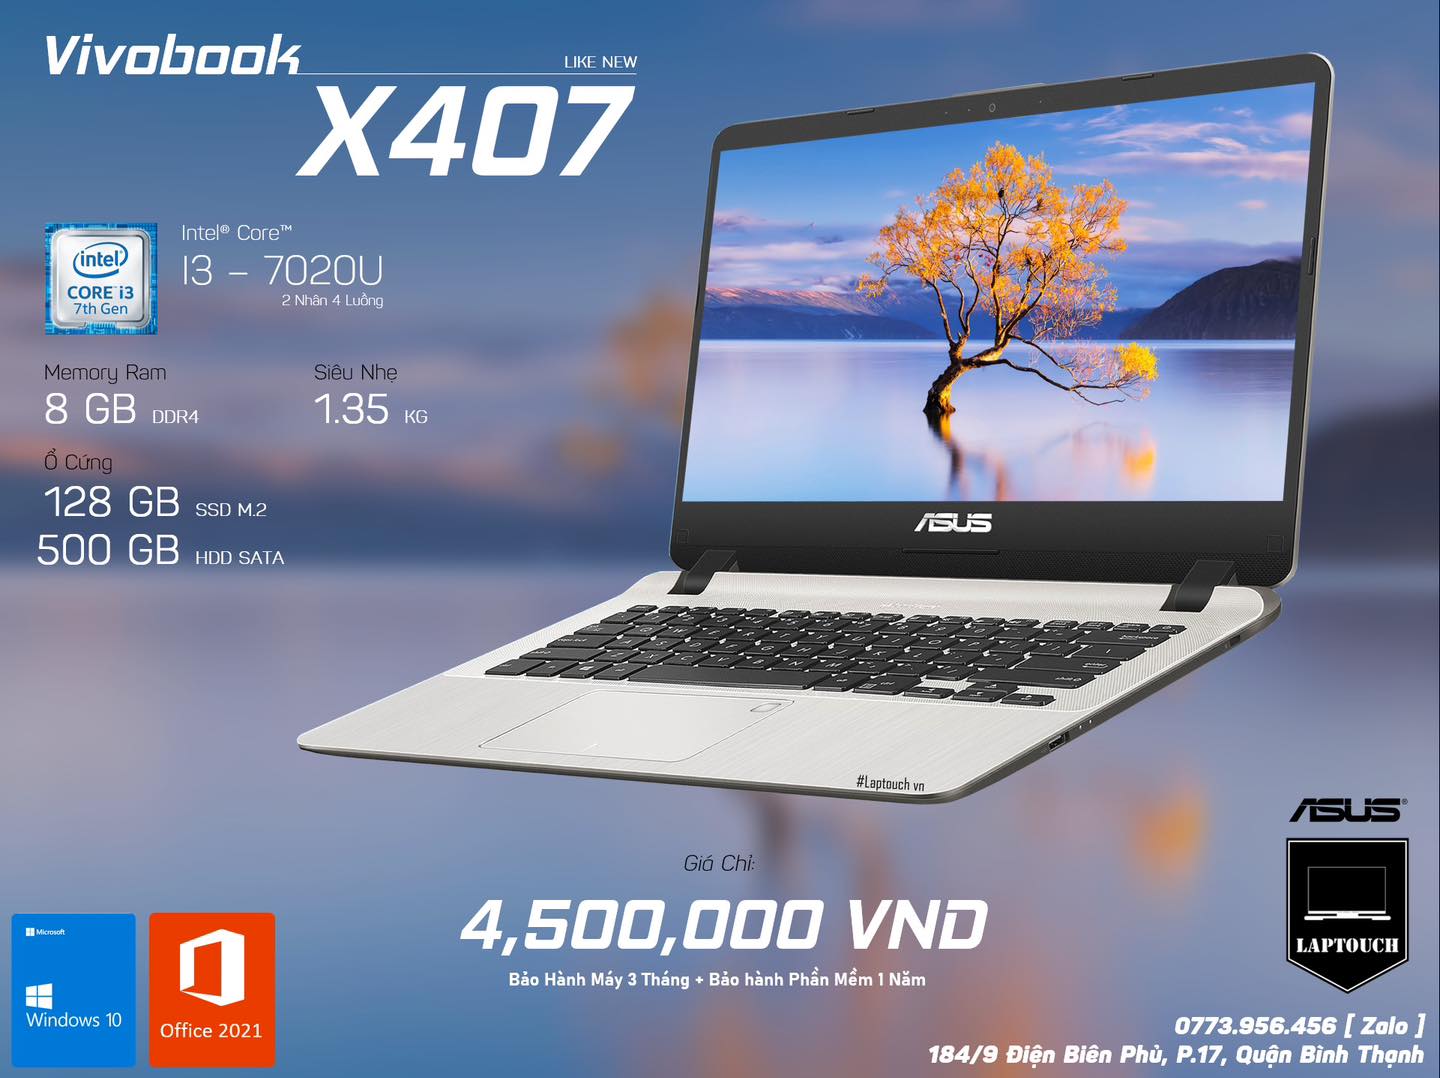 Asus Vivobook X407 [ Like New ]